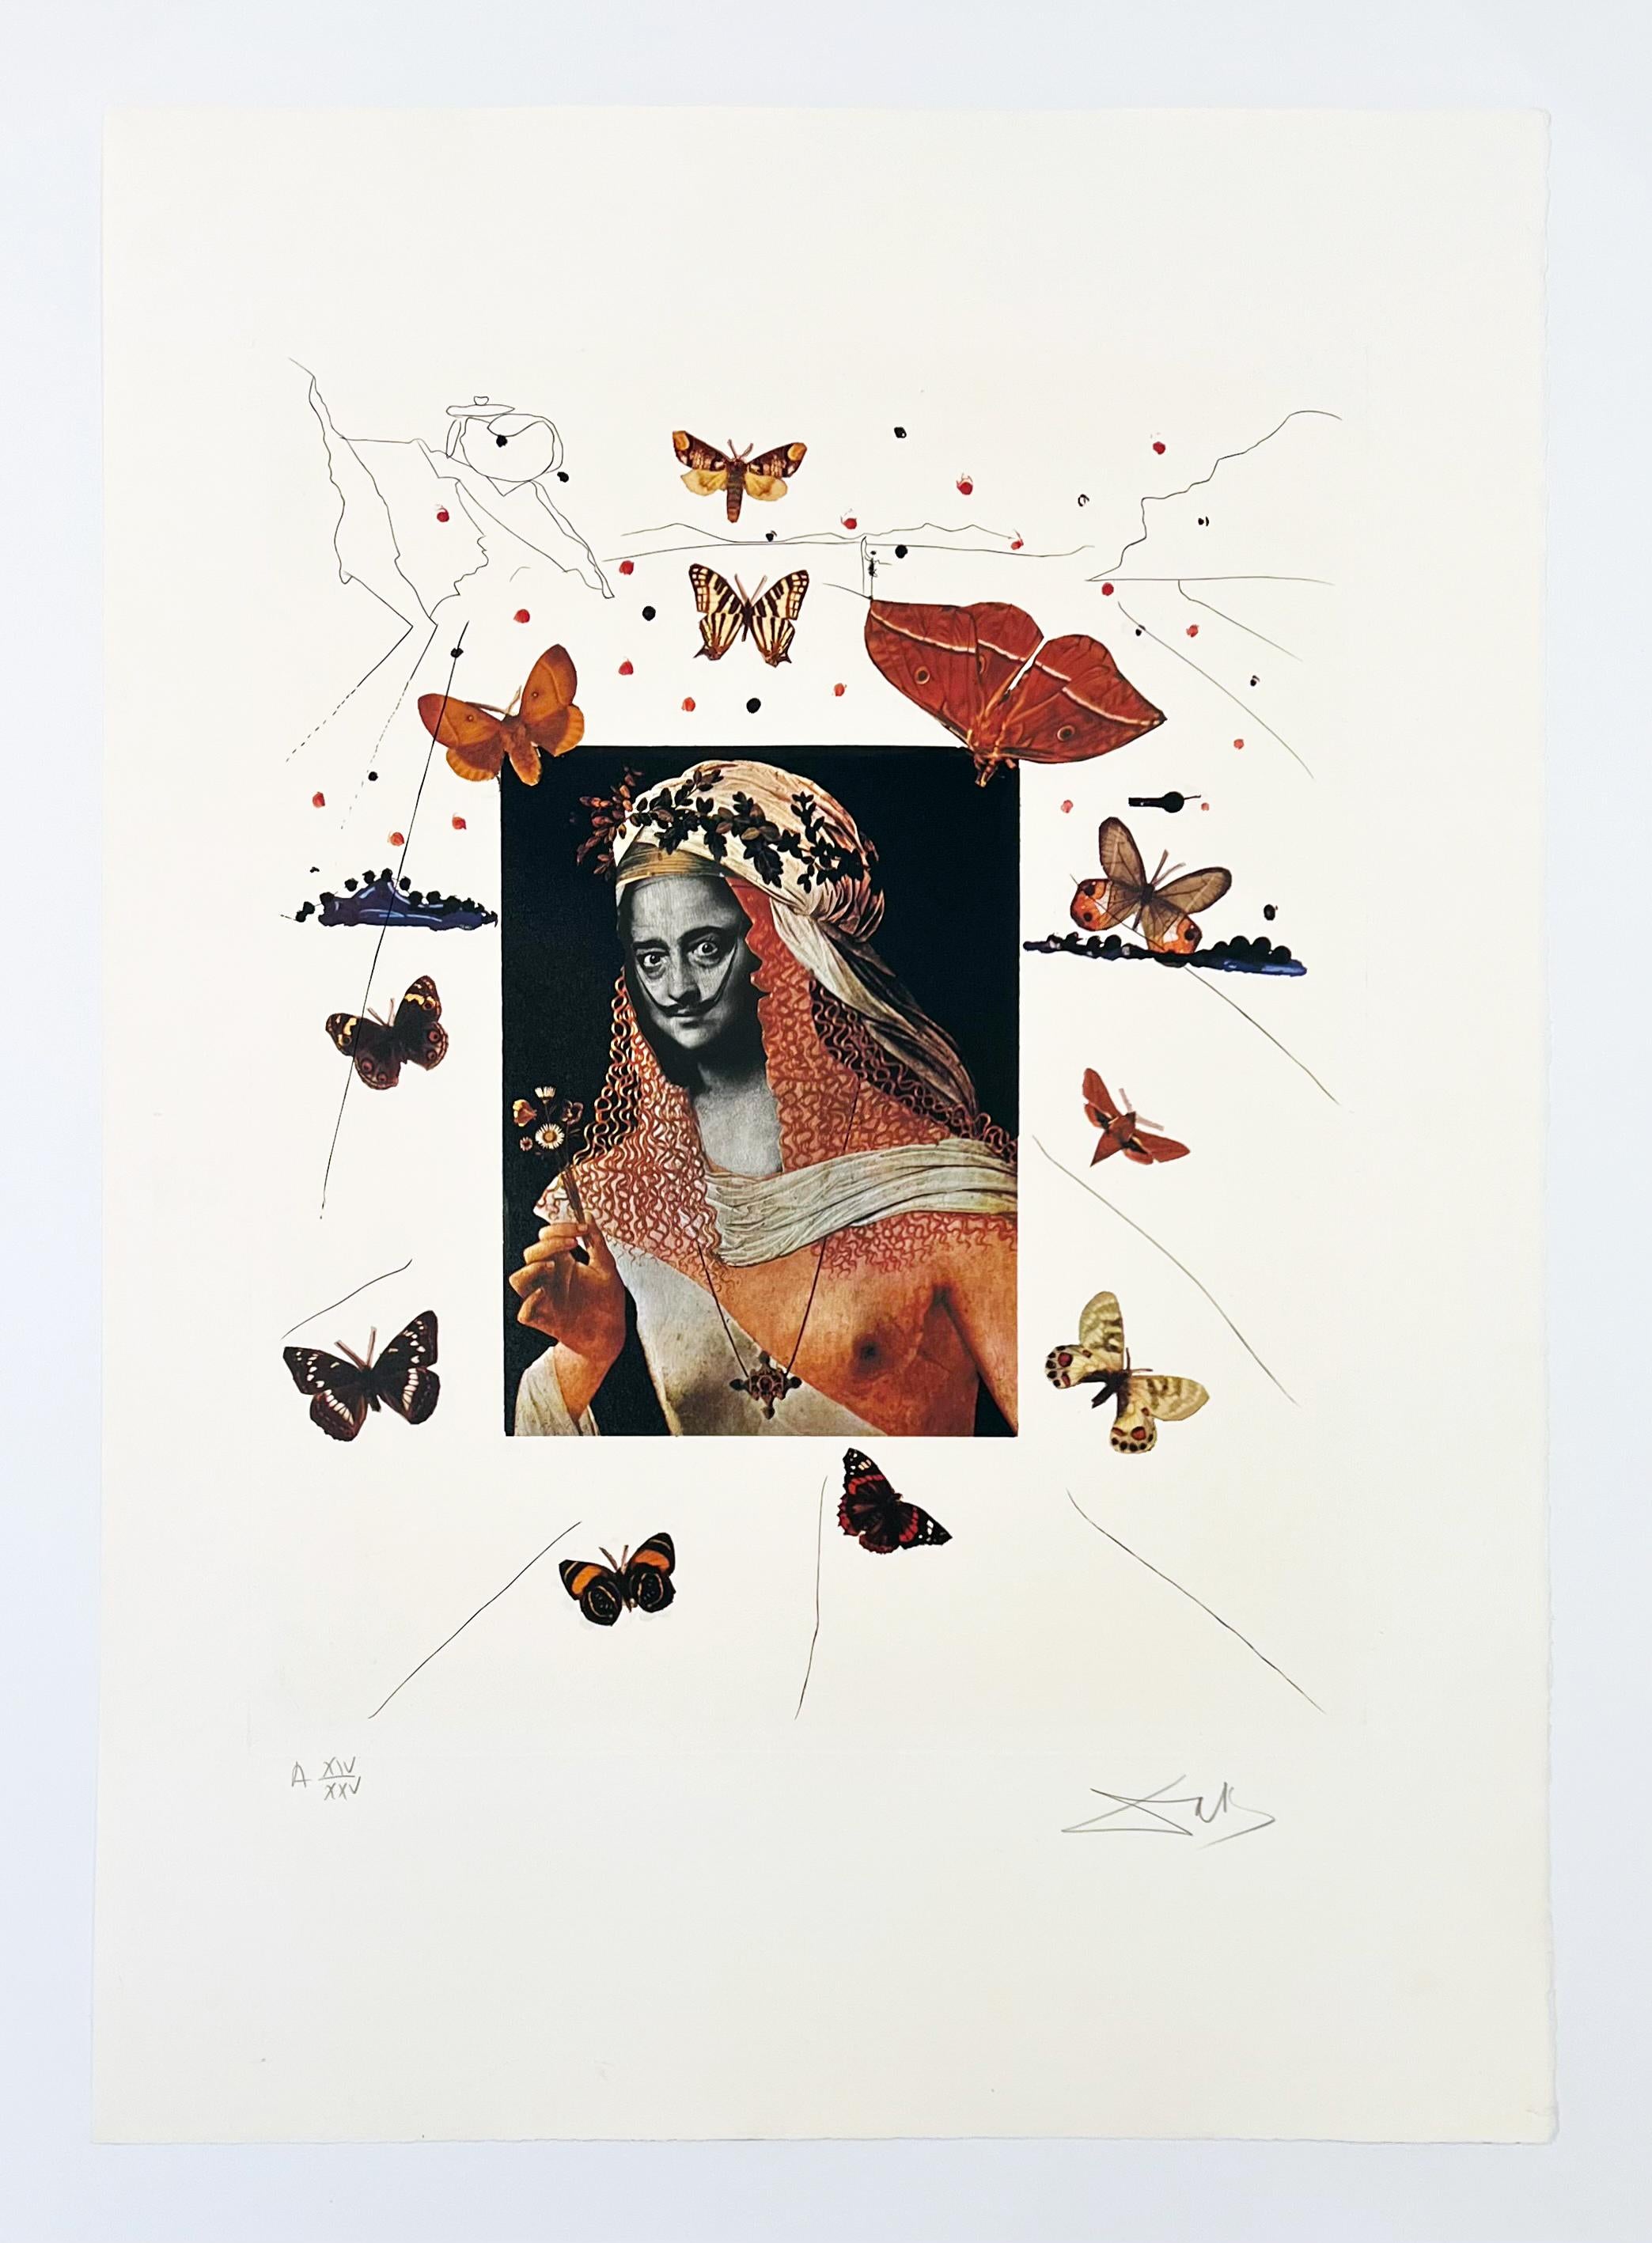 Surrealist Portrait of Dali Surrounded by Butterflies, Memories of Surrealism - Print by Salvador Dalí